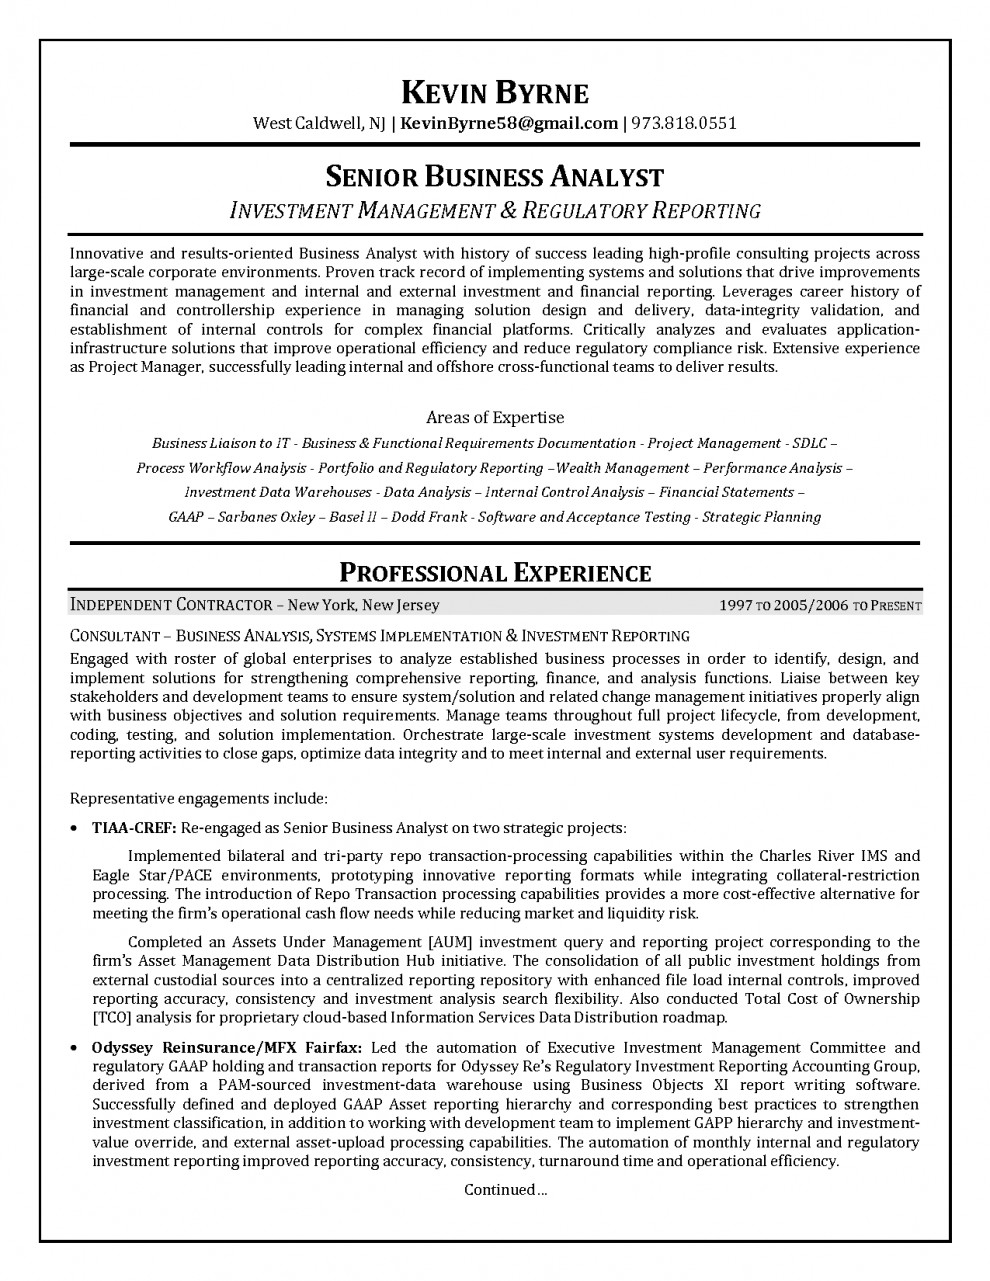 Resume Senior Business Analyst Resume Format Business